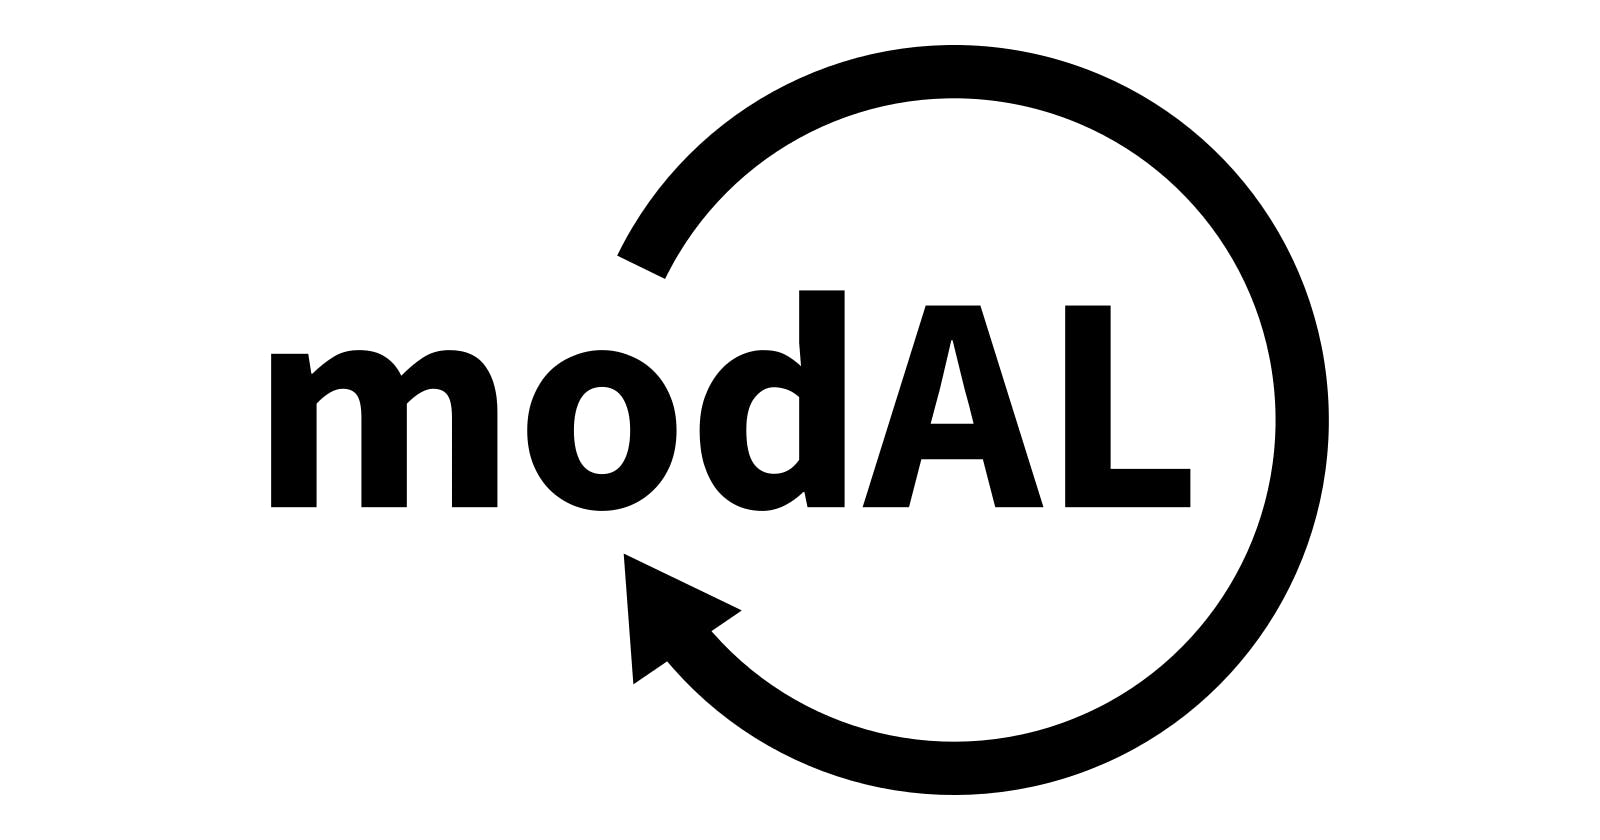 Building a modular active learning framework